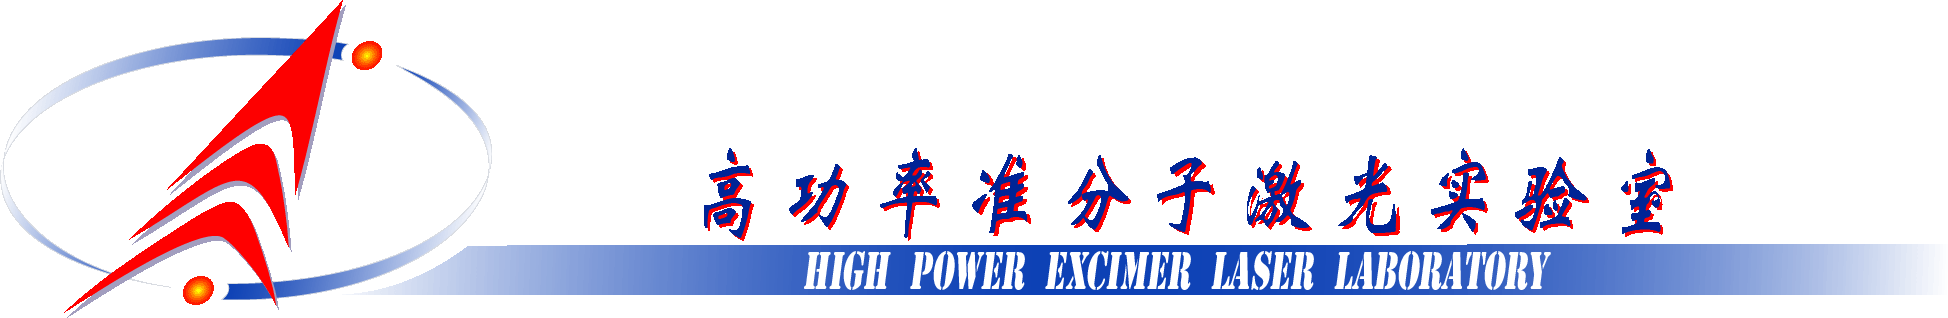 High Power Excimer Laser Laboratory